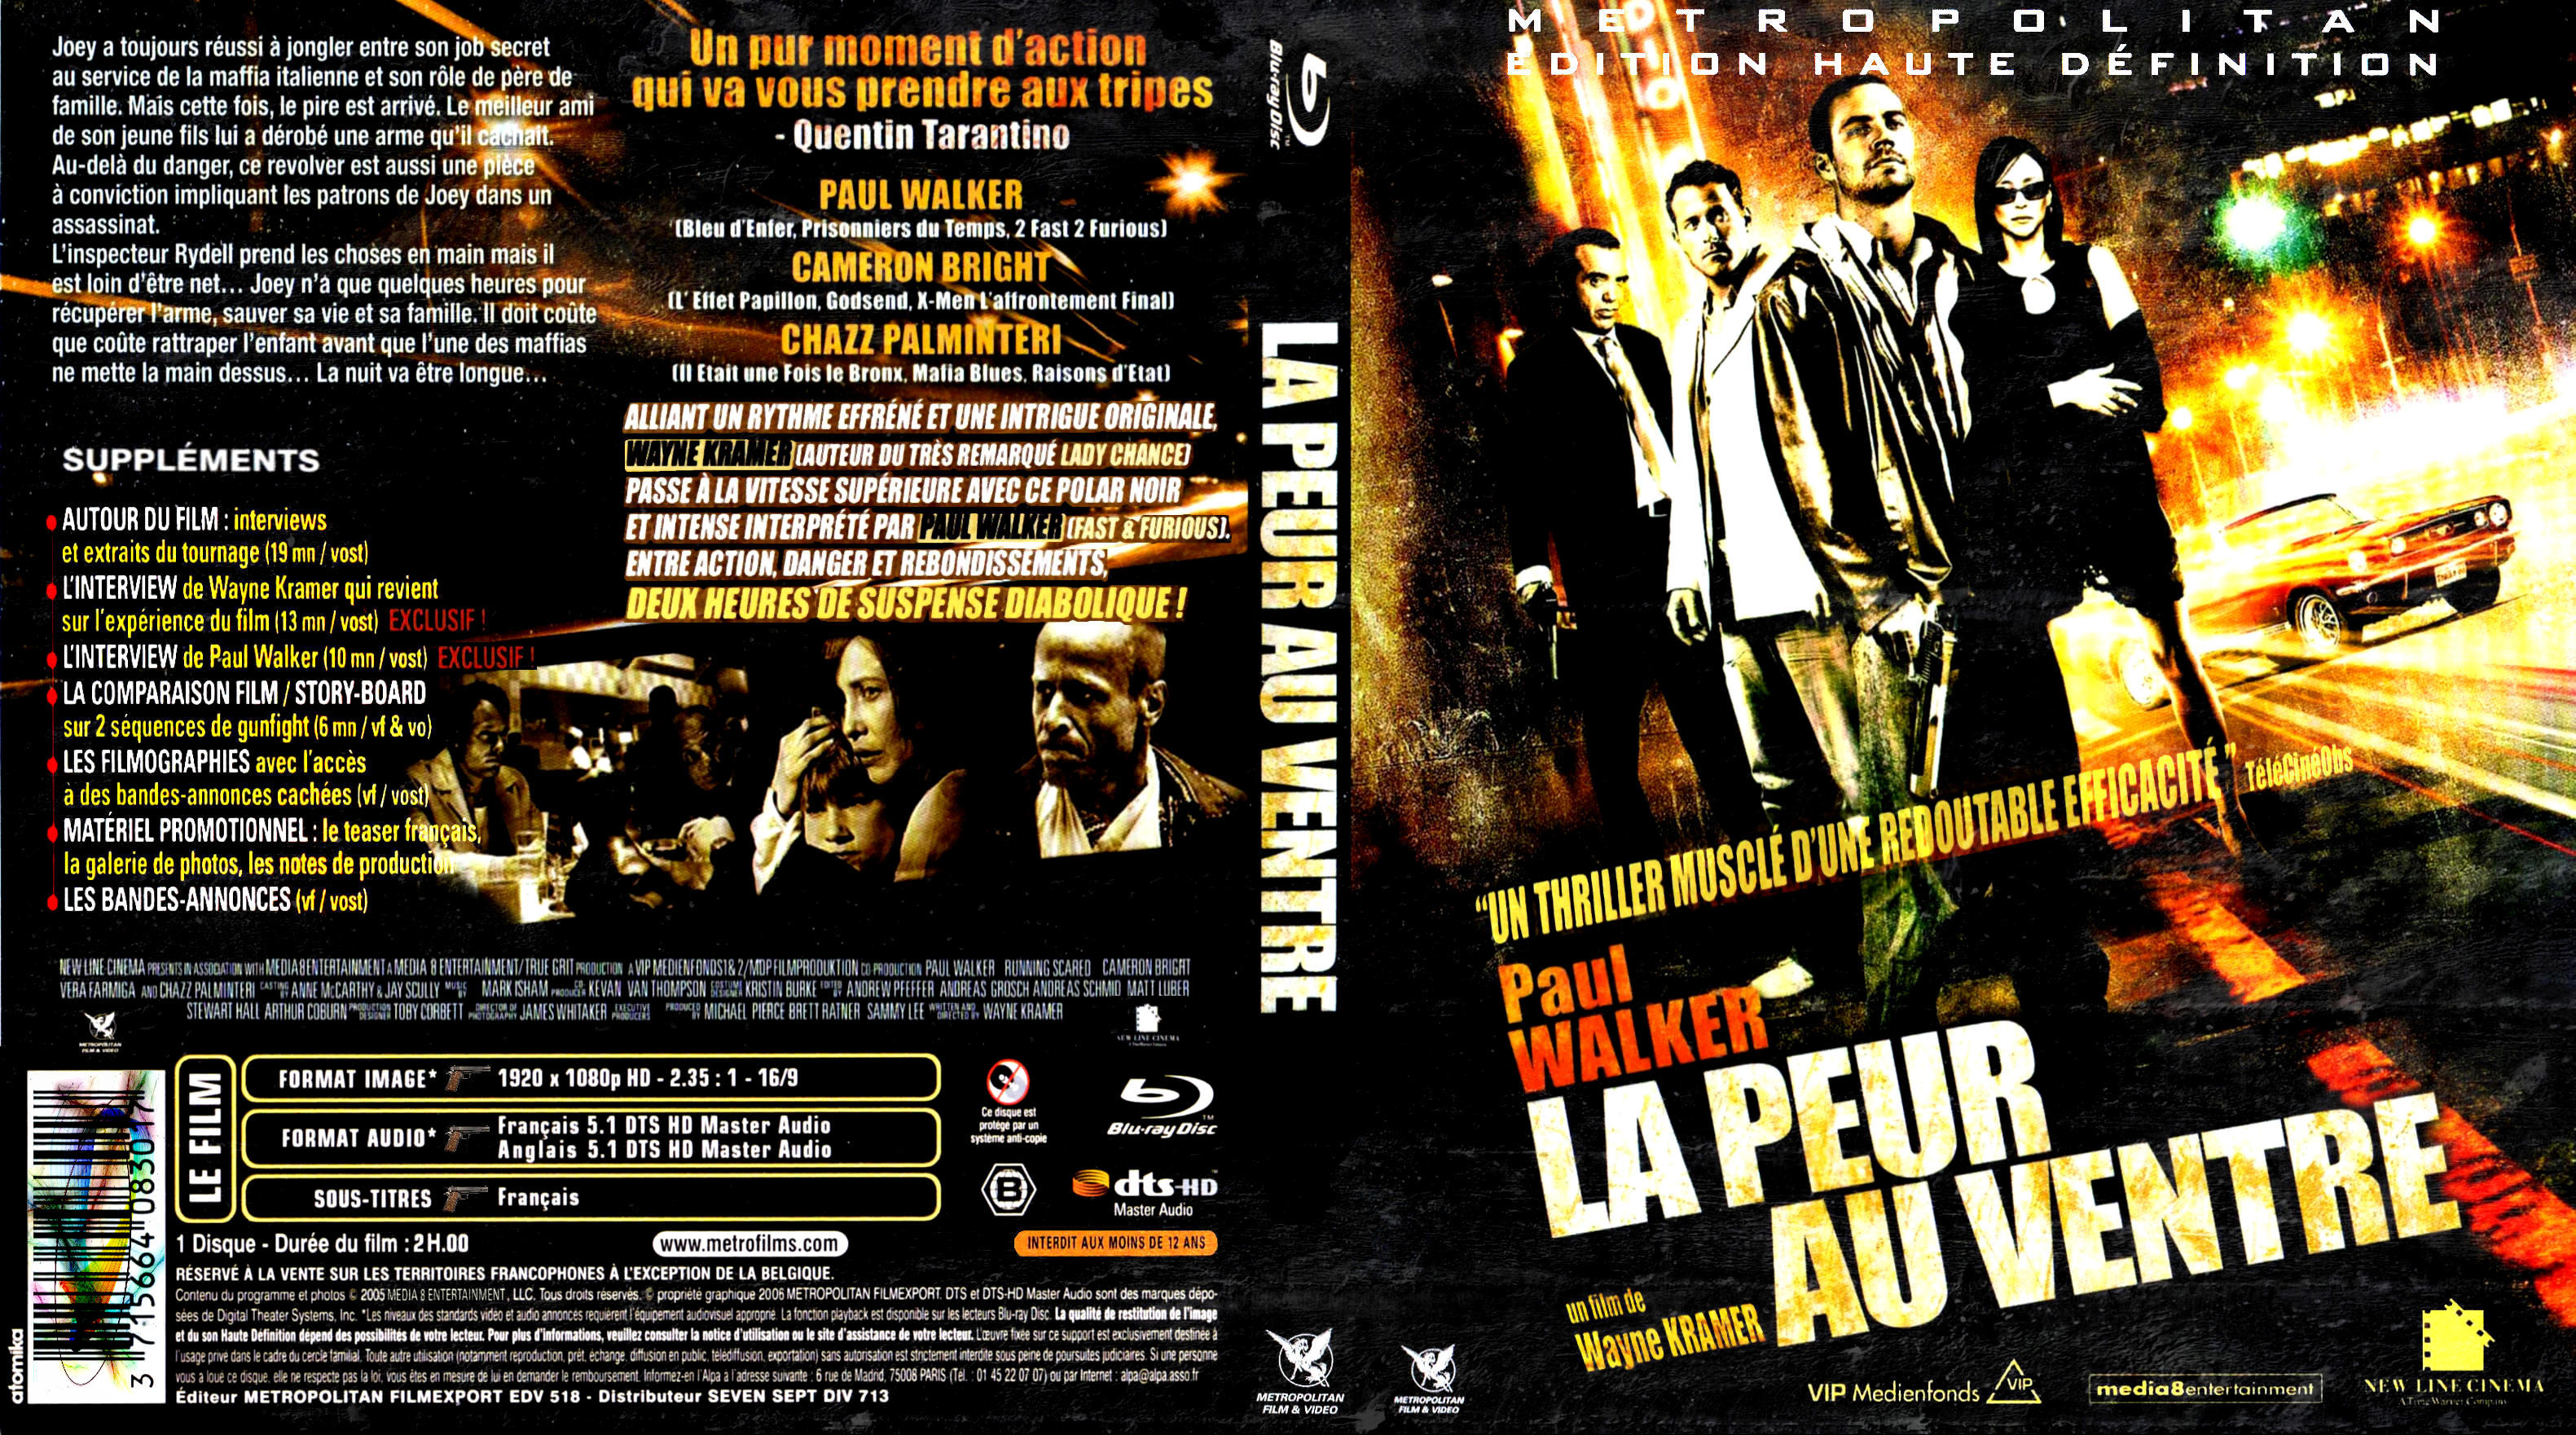 Jaquette DVD La peur au ventre custom (BLU-RAY)